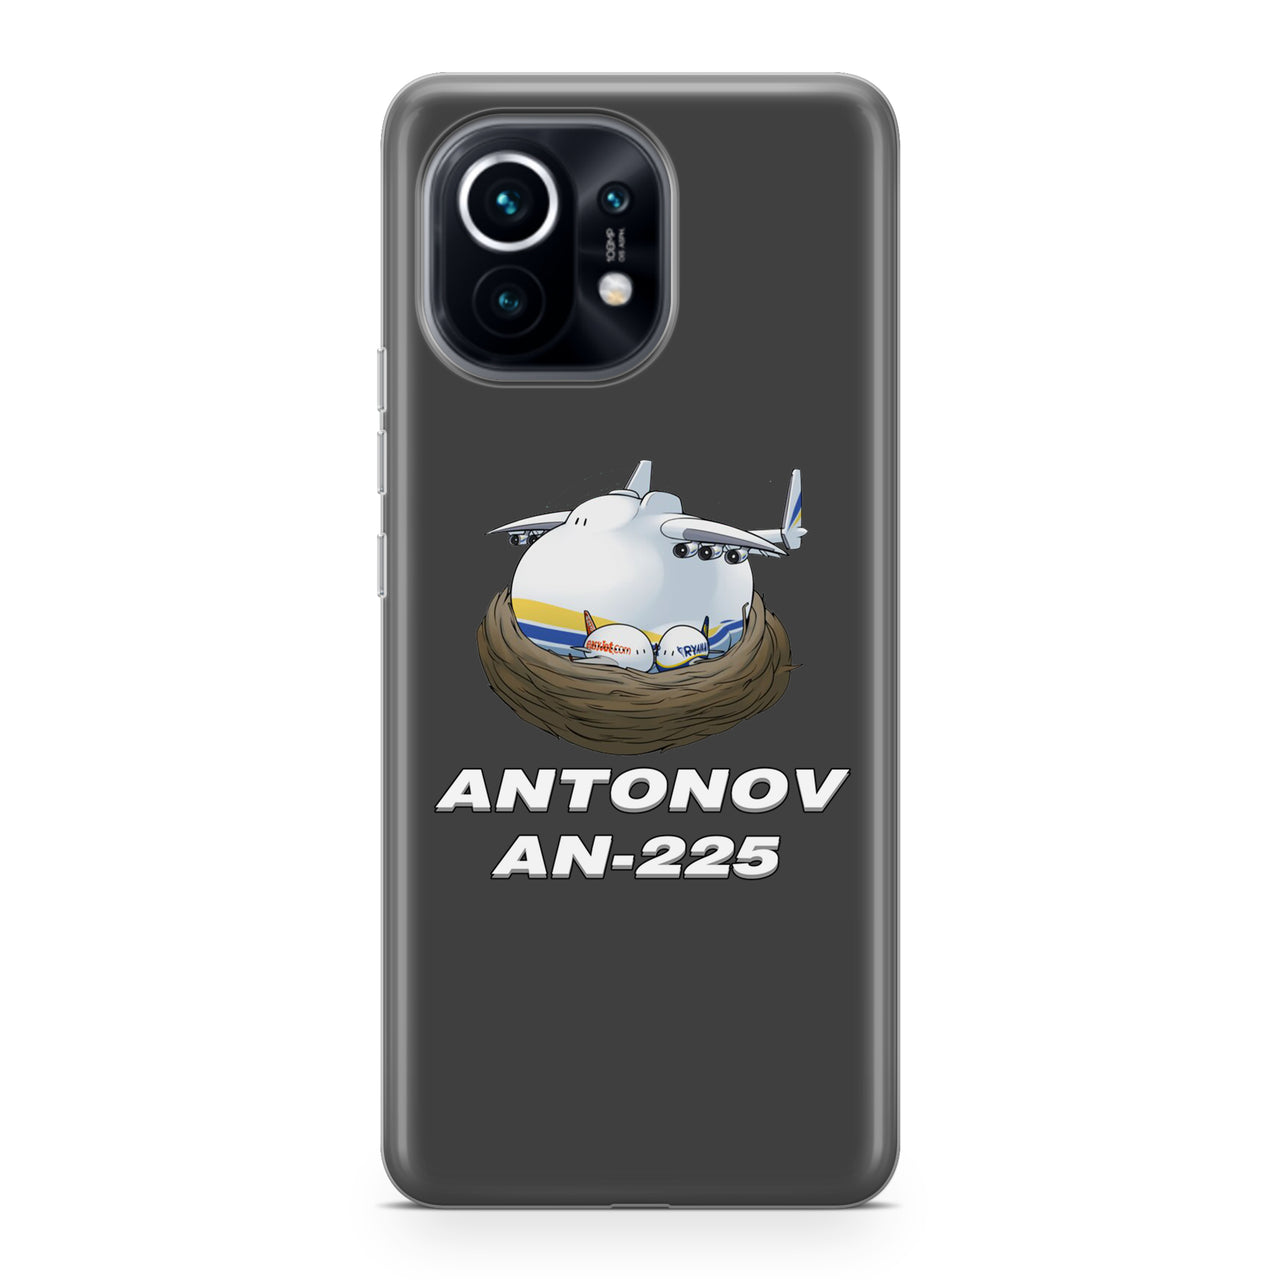 Antonov AN-225 (22) Designed Xiaomi Cases